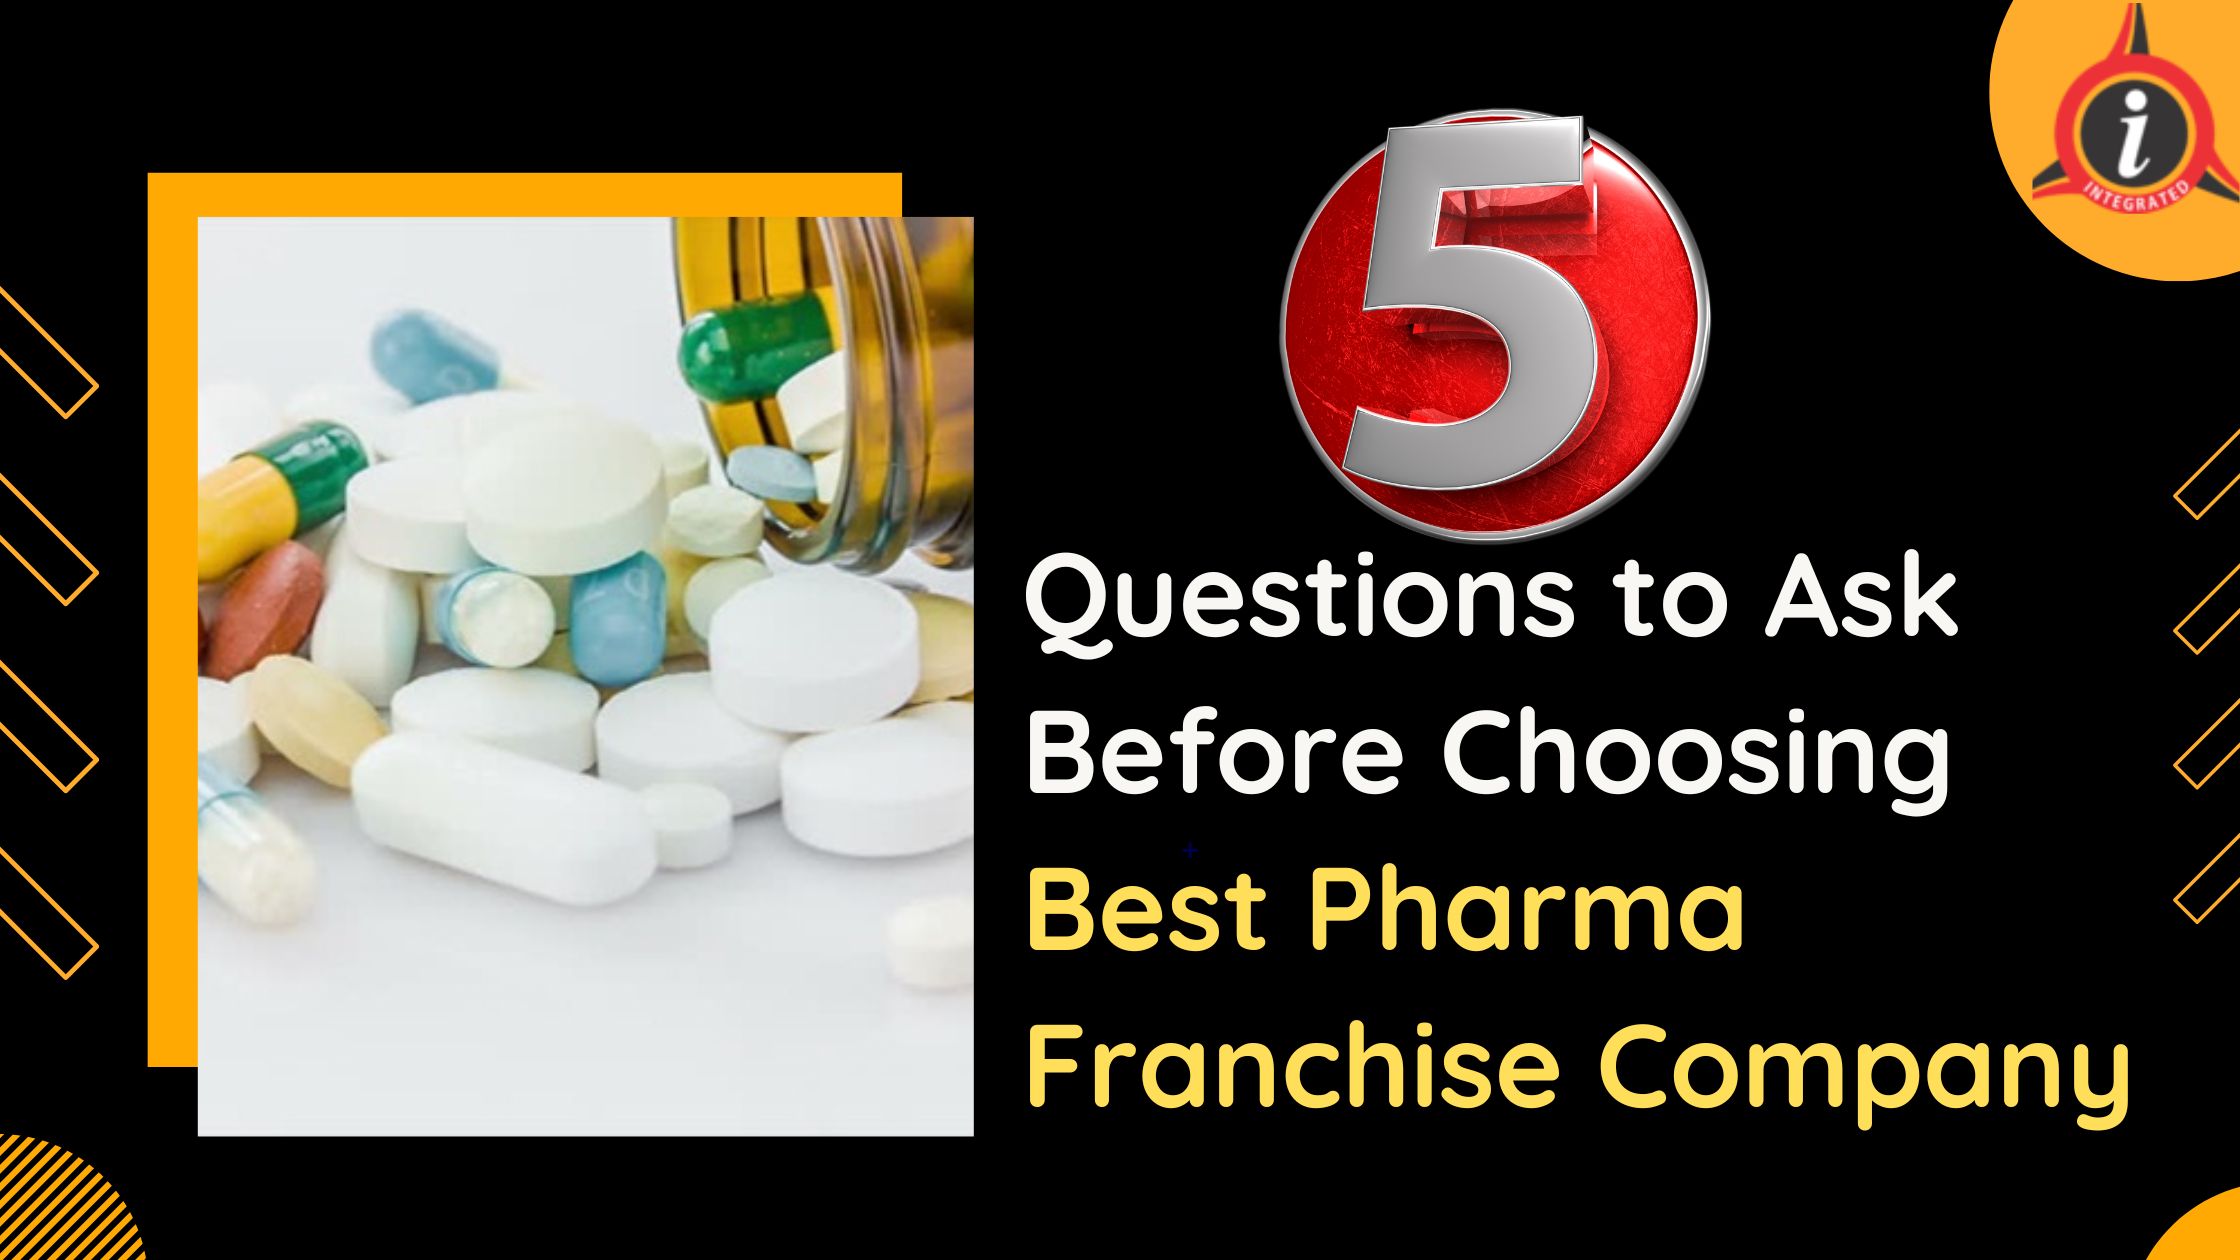 Best pharma franchise company